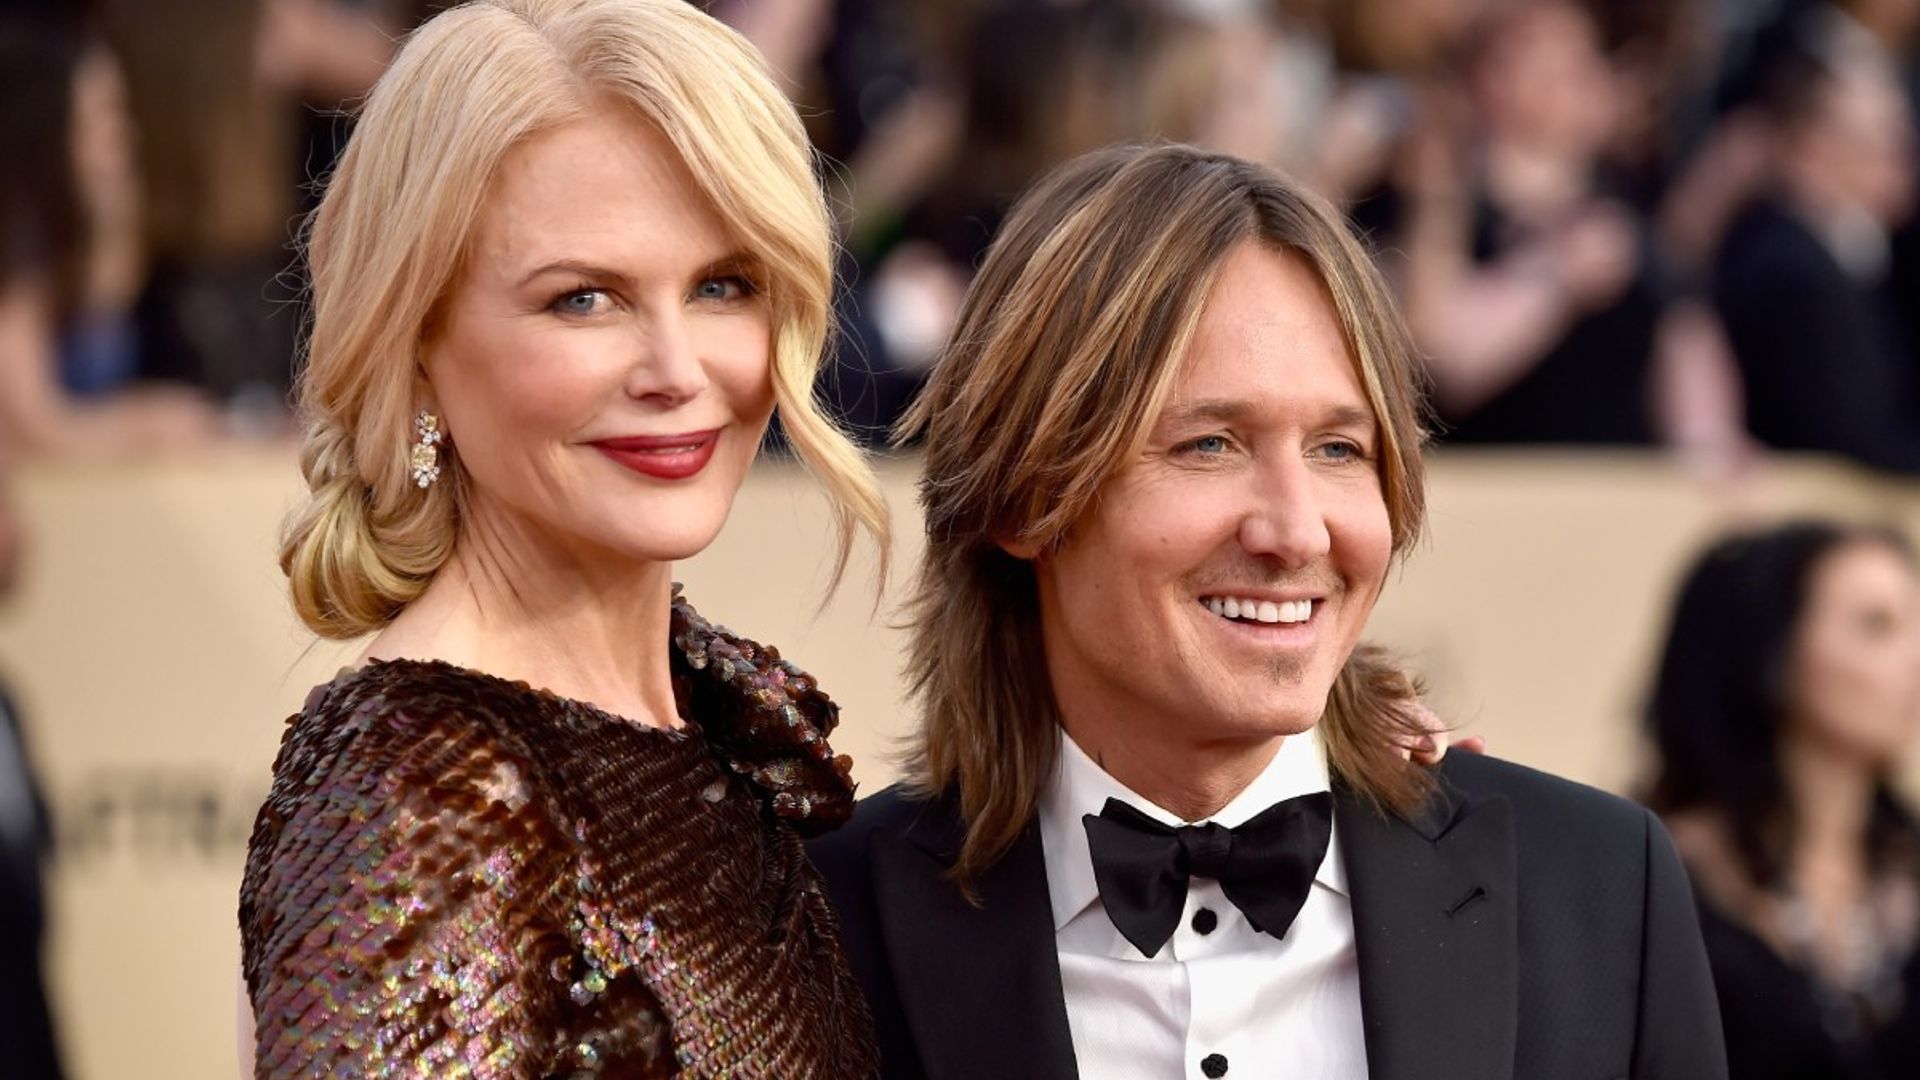 Keith Urban teases move to UK with wife Nicole Kidman